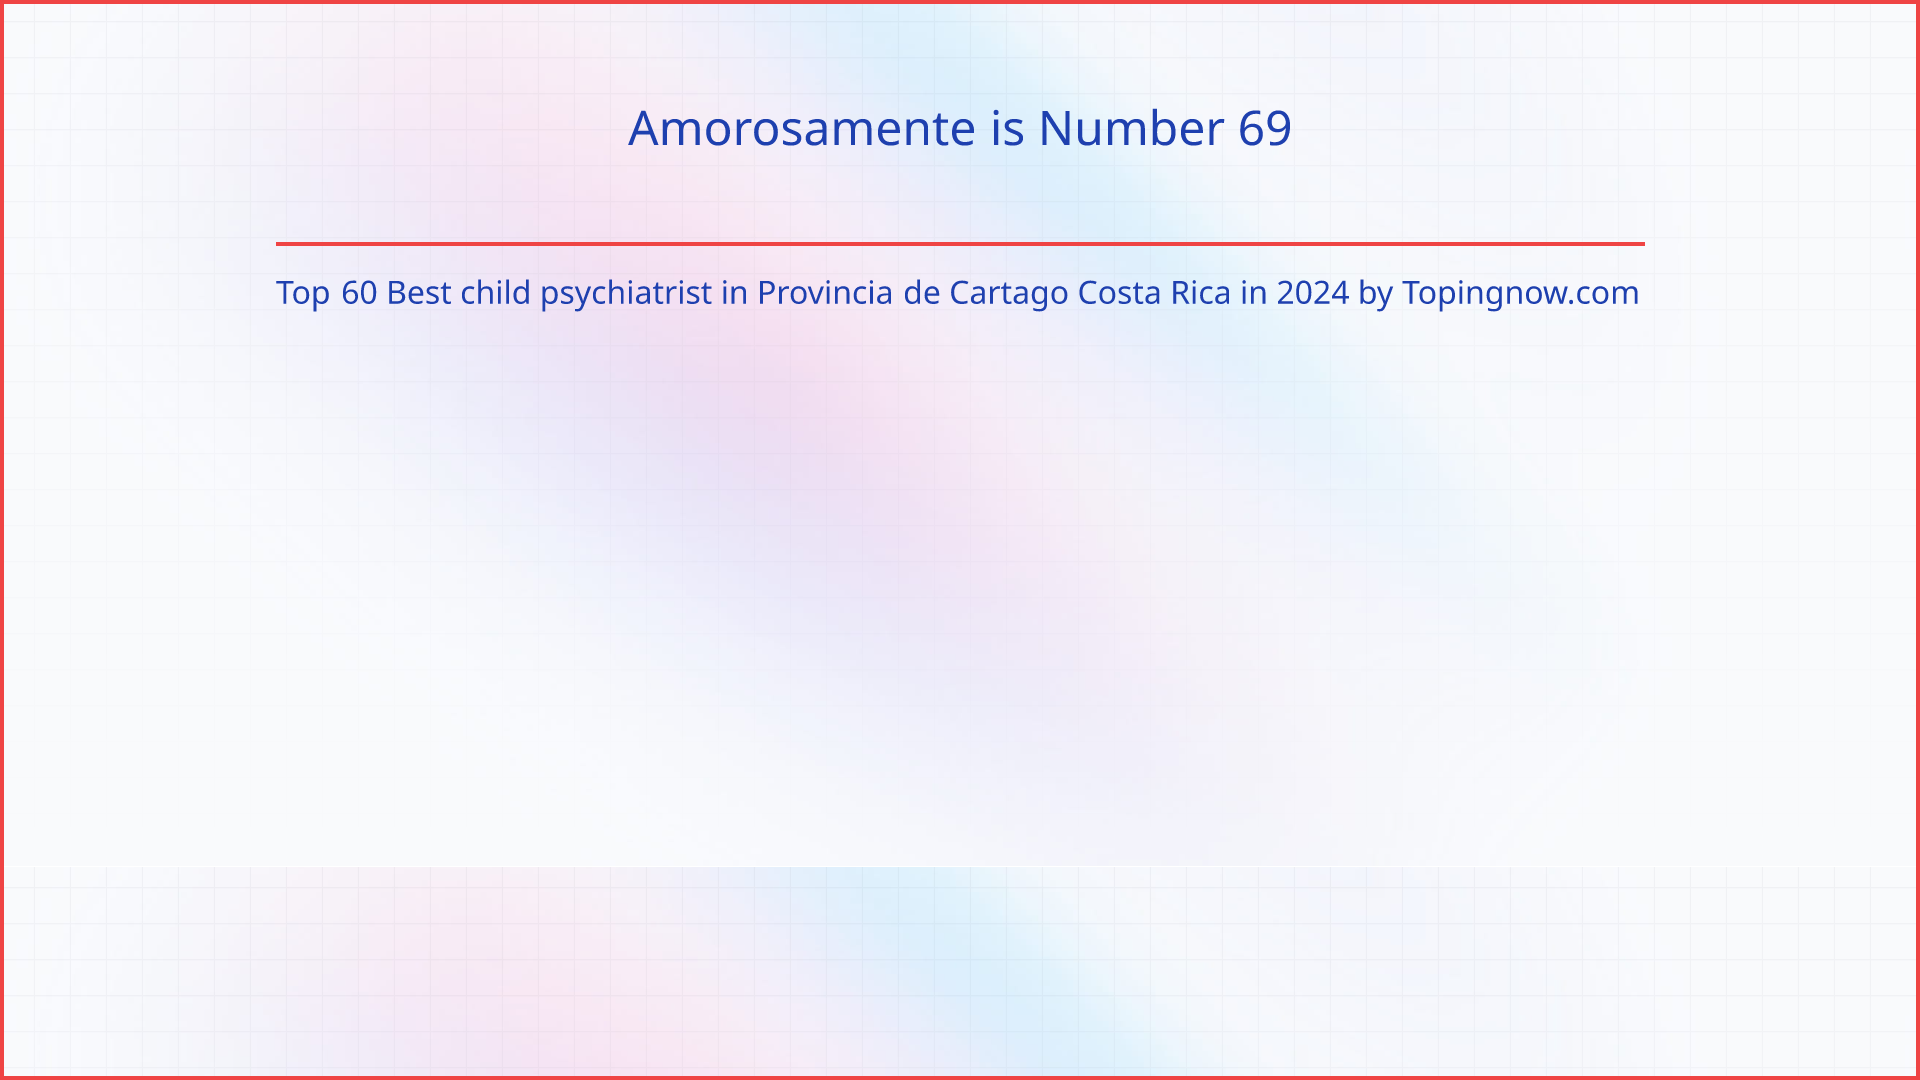 Amorosamente: Top 60 Best child psychiatrist in Provincia de Cartago Costa Rica in 2024